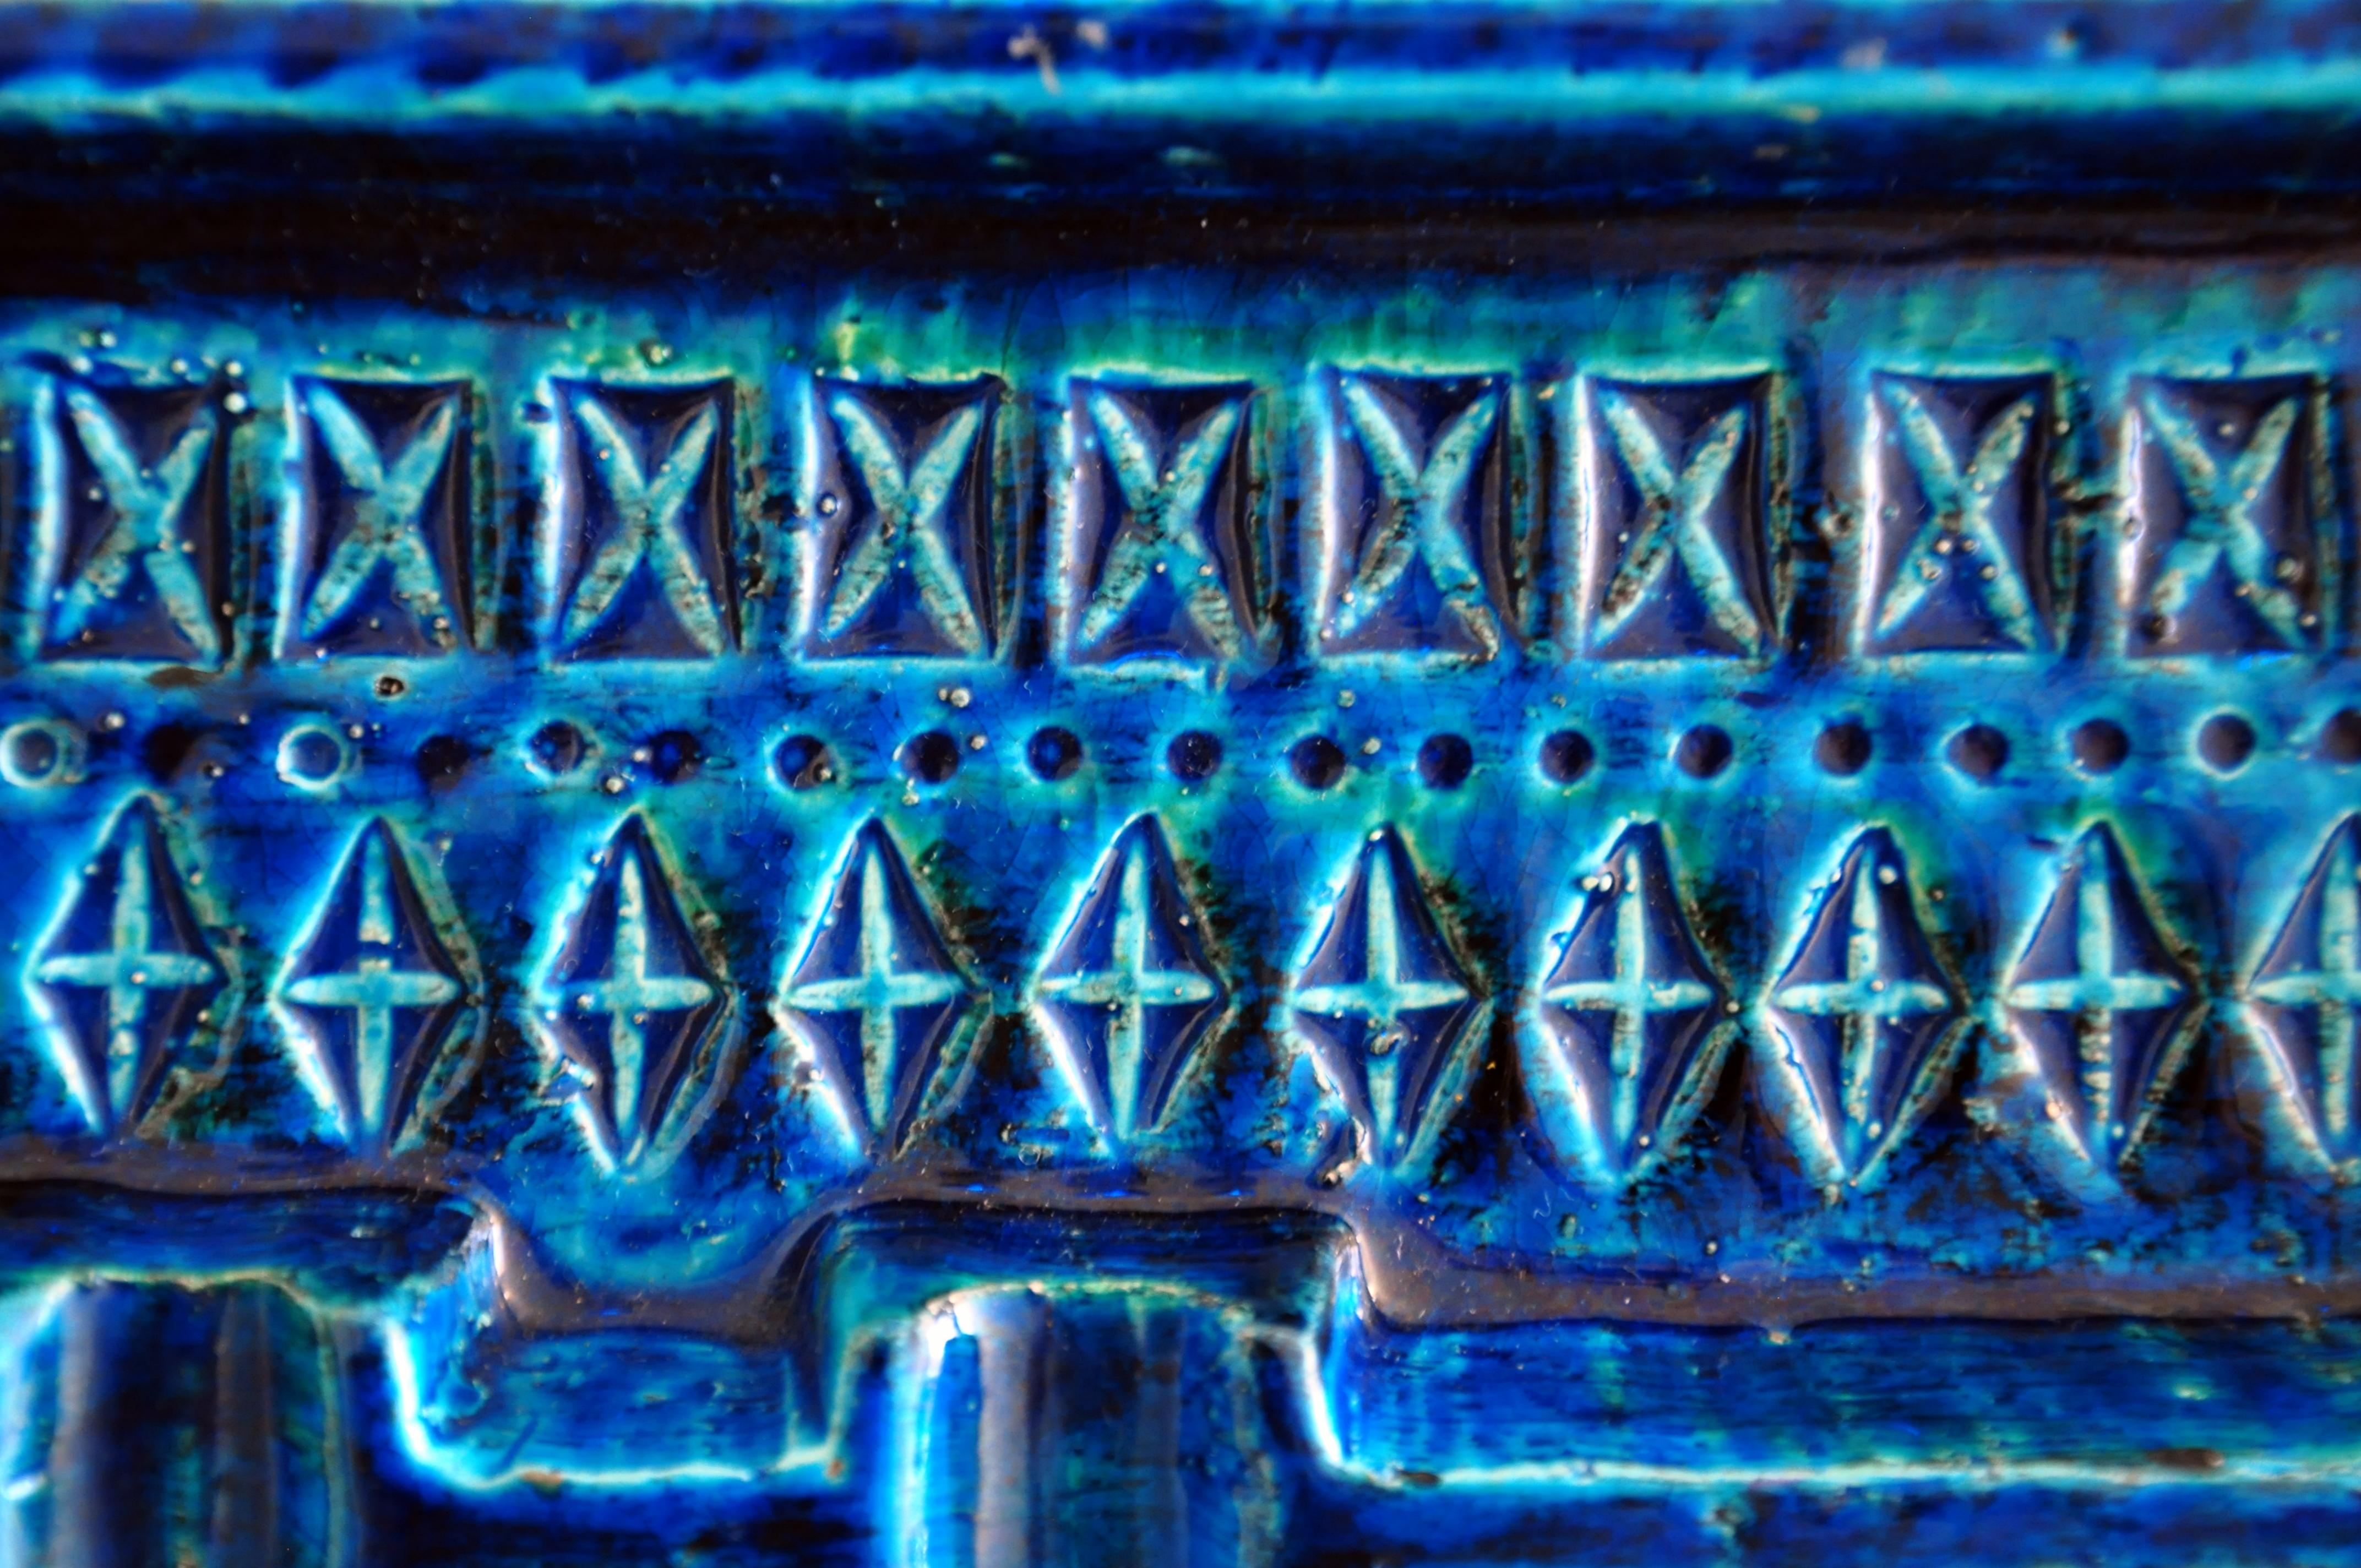 Italian handmade ceramic vide-poche or catchall tray in the vibrant signature blue of Aldo Londi's iconic art pottery collection Rimini Blu, originally designed in 1959 for Bitossi Ceramiche and imported by Raymor in the 1960s. The cigar ashtray